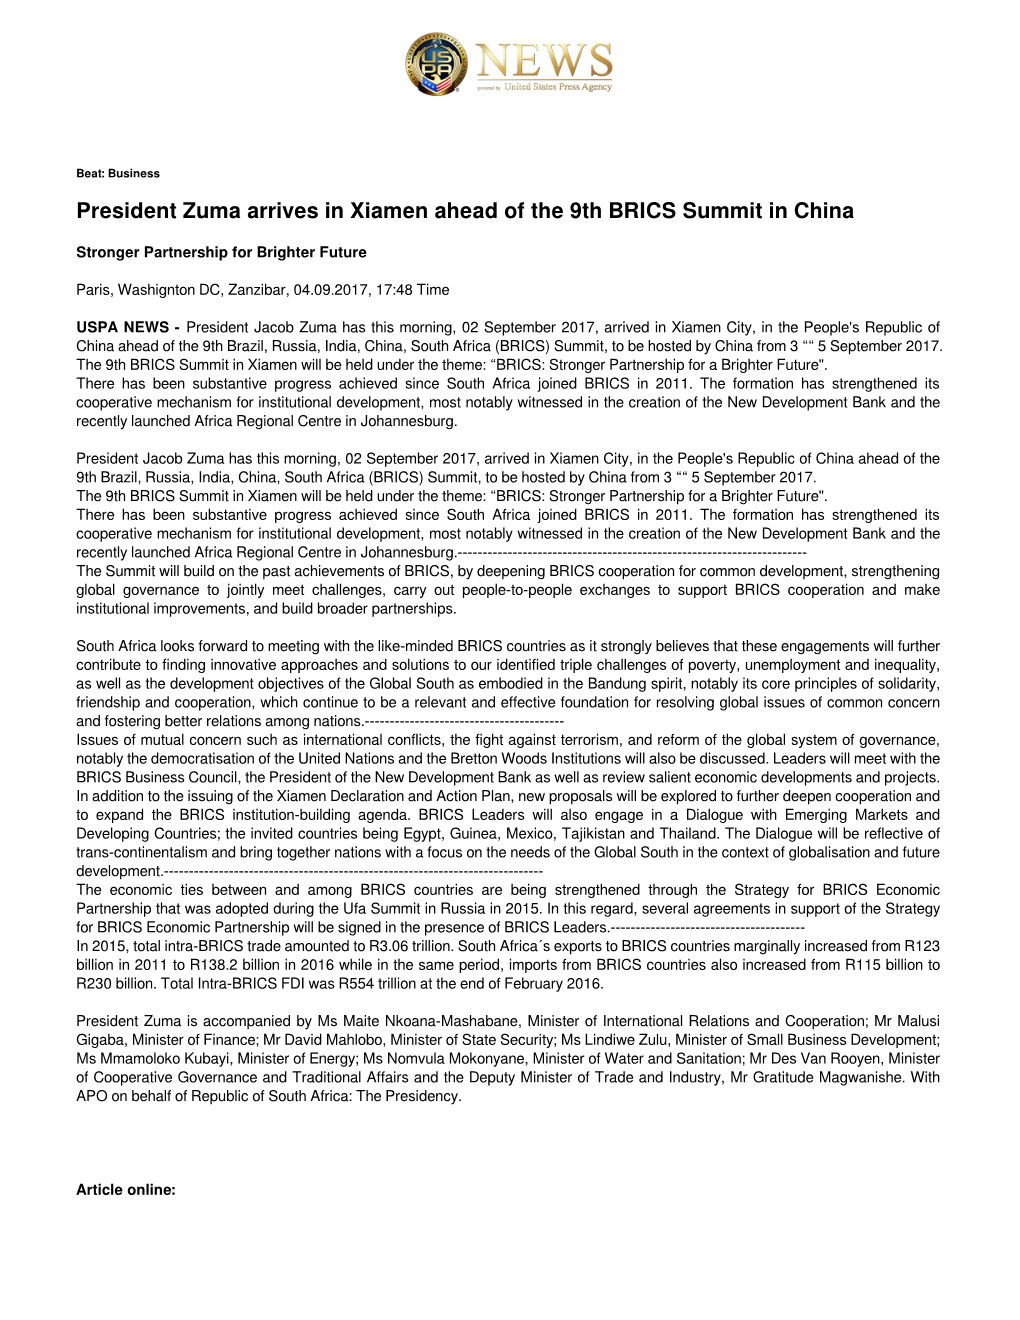 President Zuma Arrives in Xiamen Ahead of the 9Th BRICS Summit in China